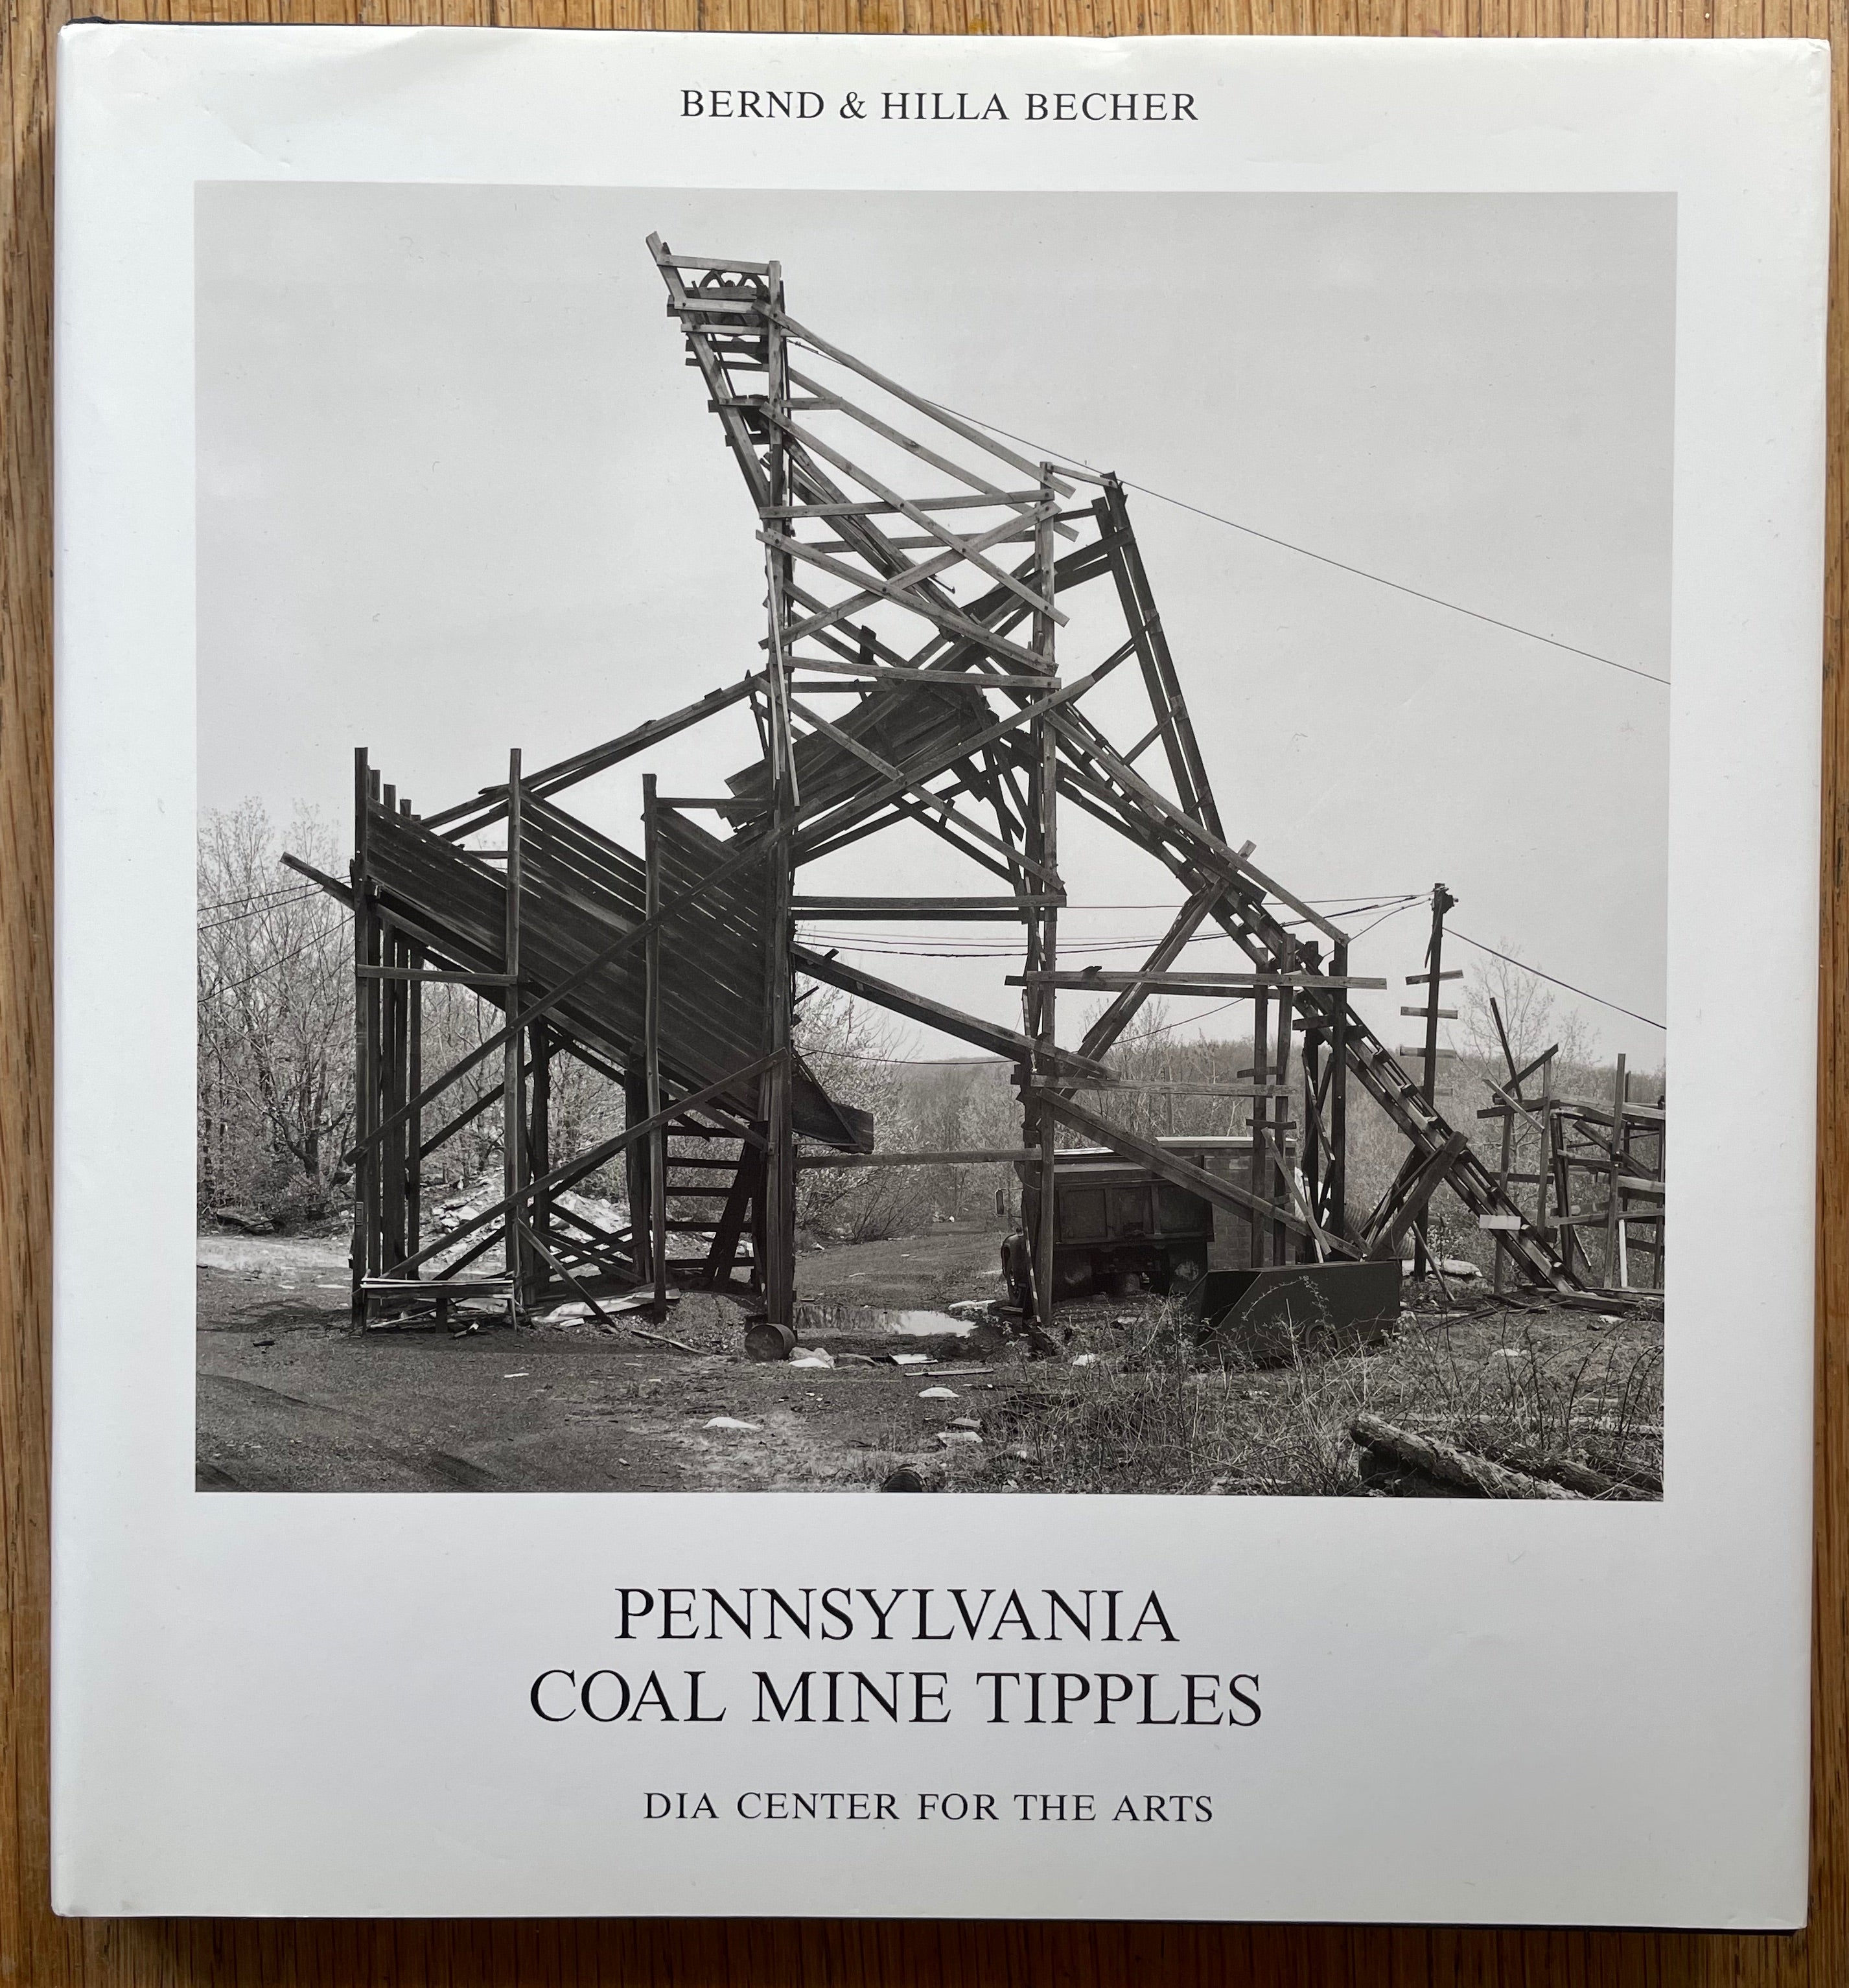 Buy Pennsylvania Coal Mine Tipples Bernd and Hilla Becher book 